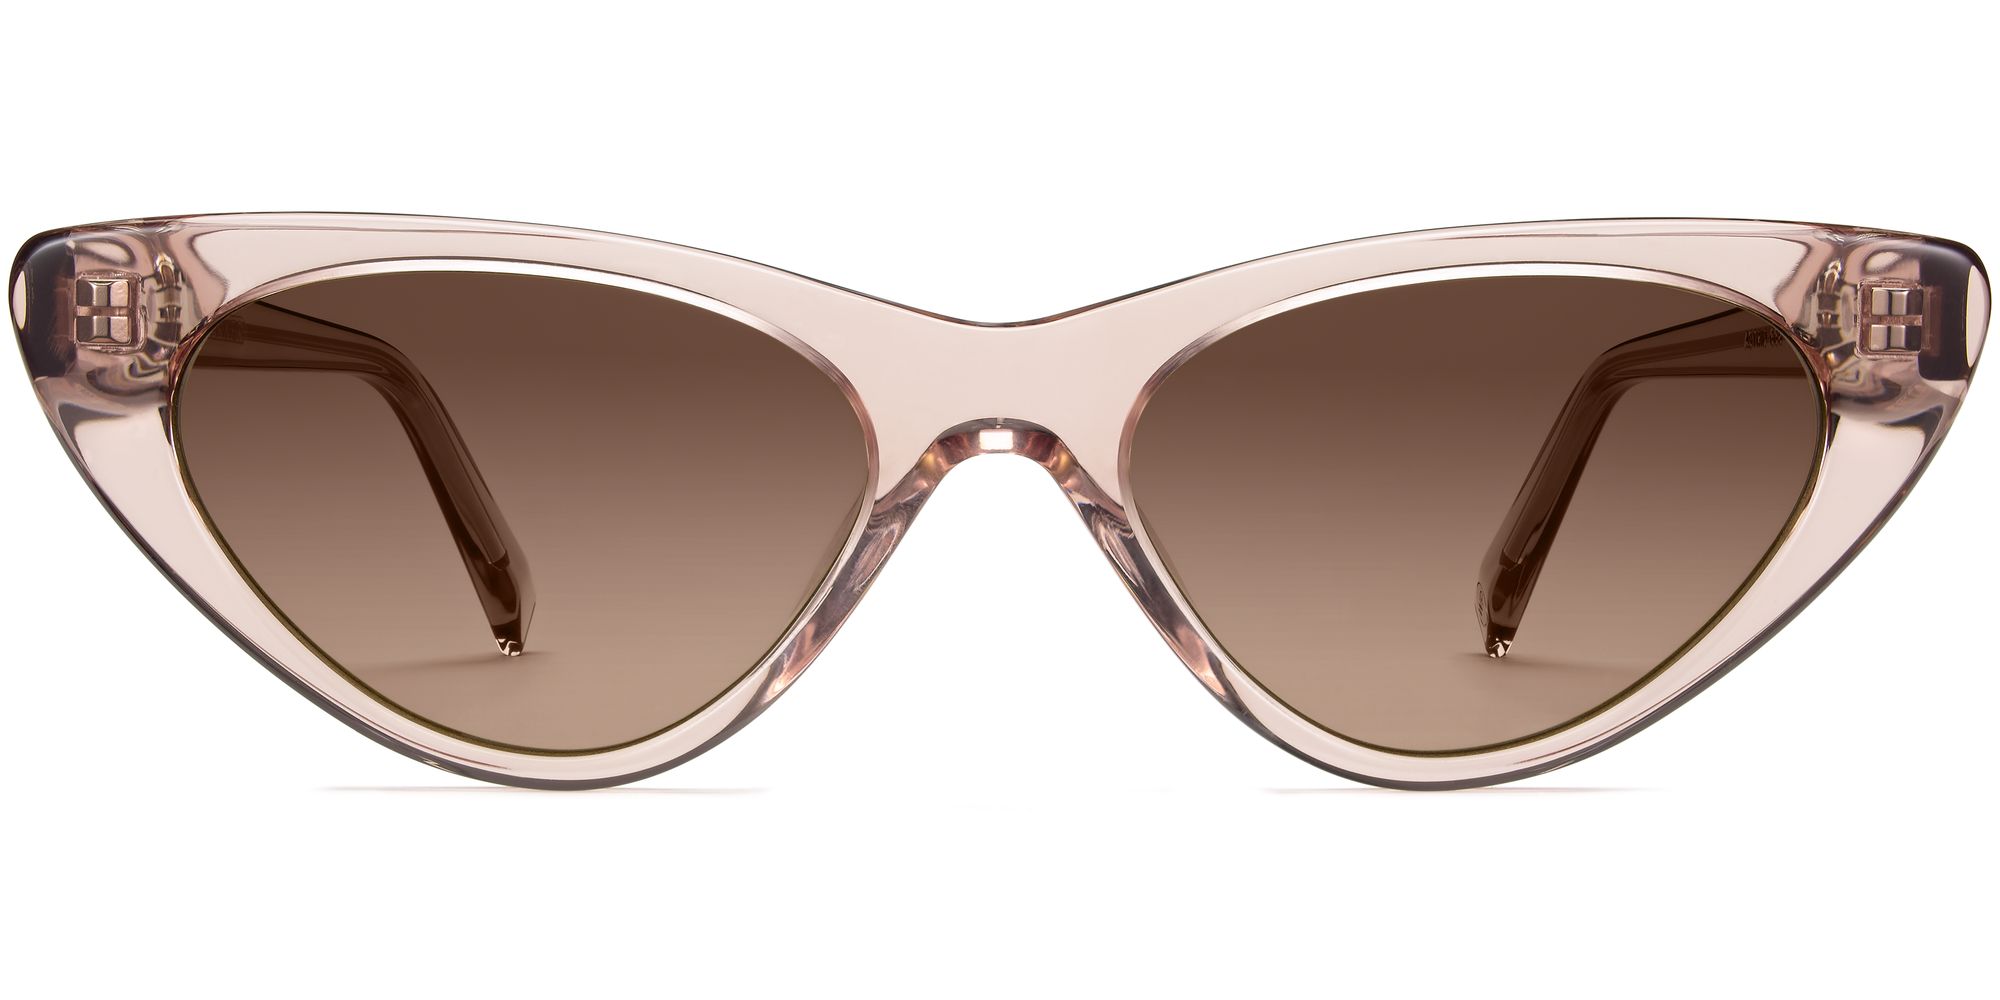 Our Favorite Warby Parker Sunglasses - Prescription and ...